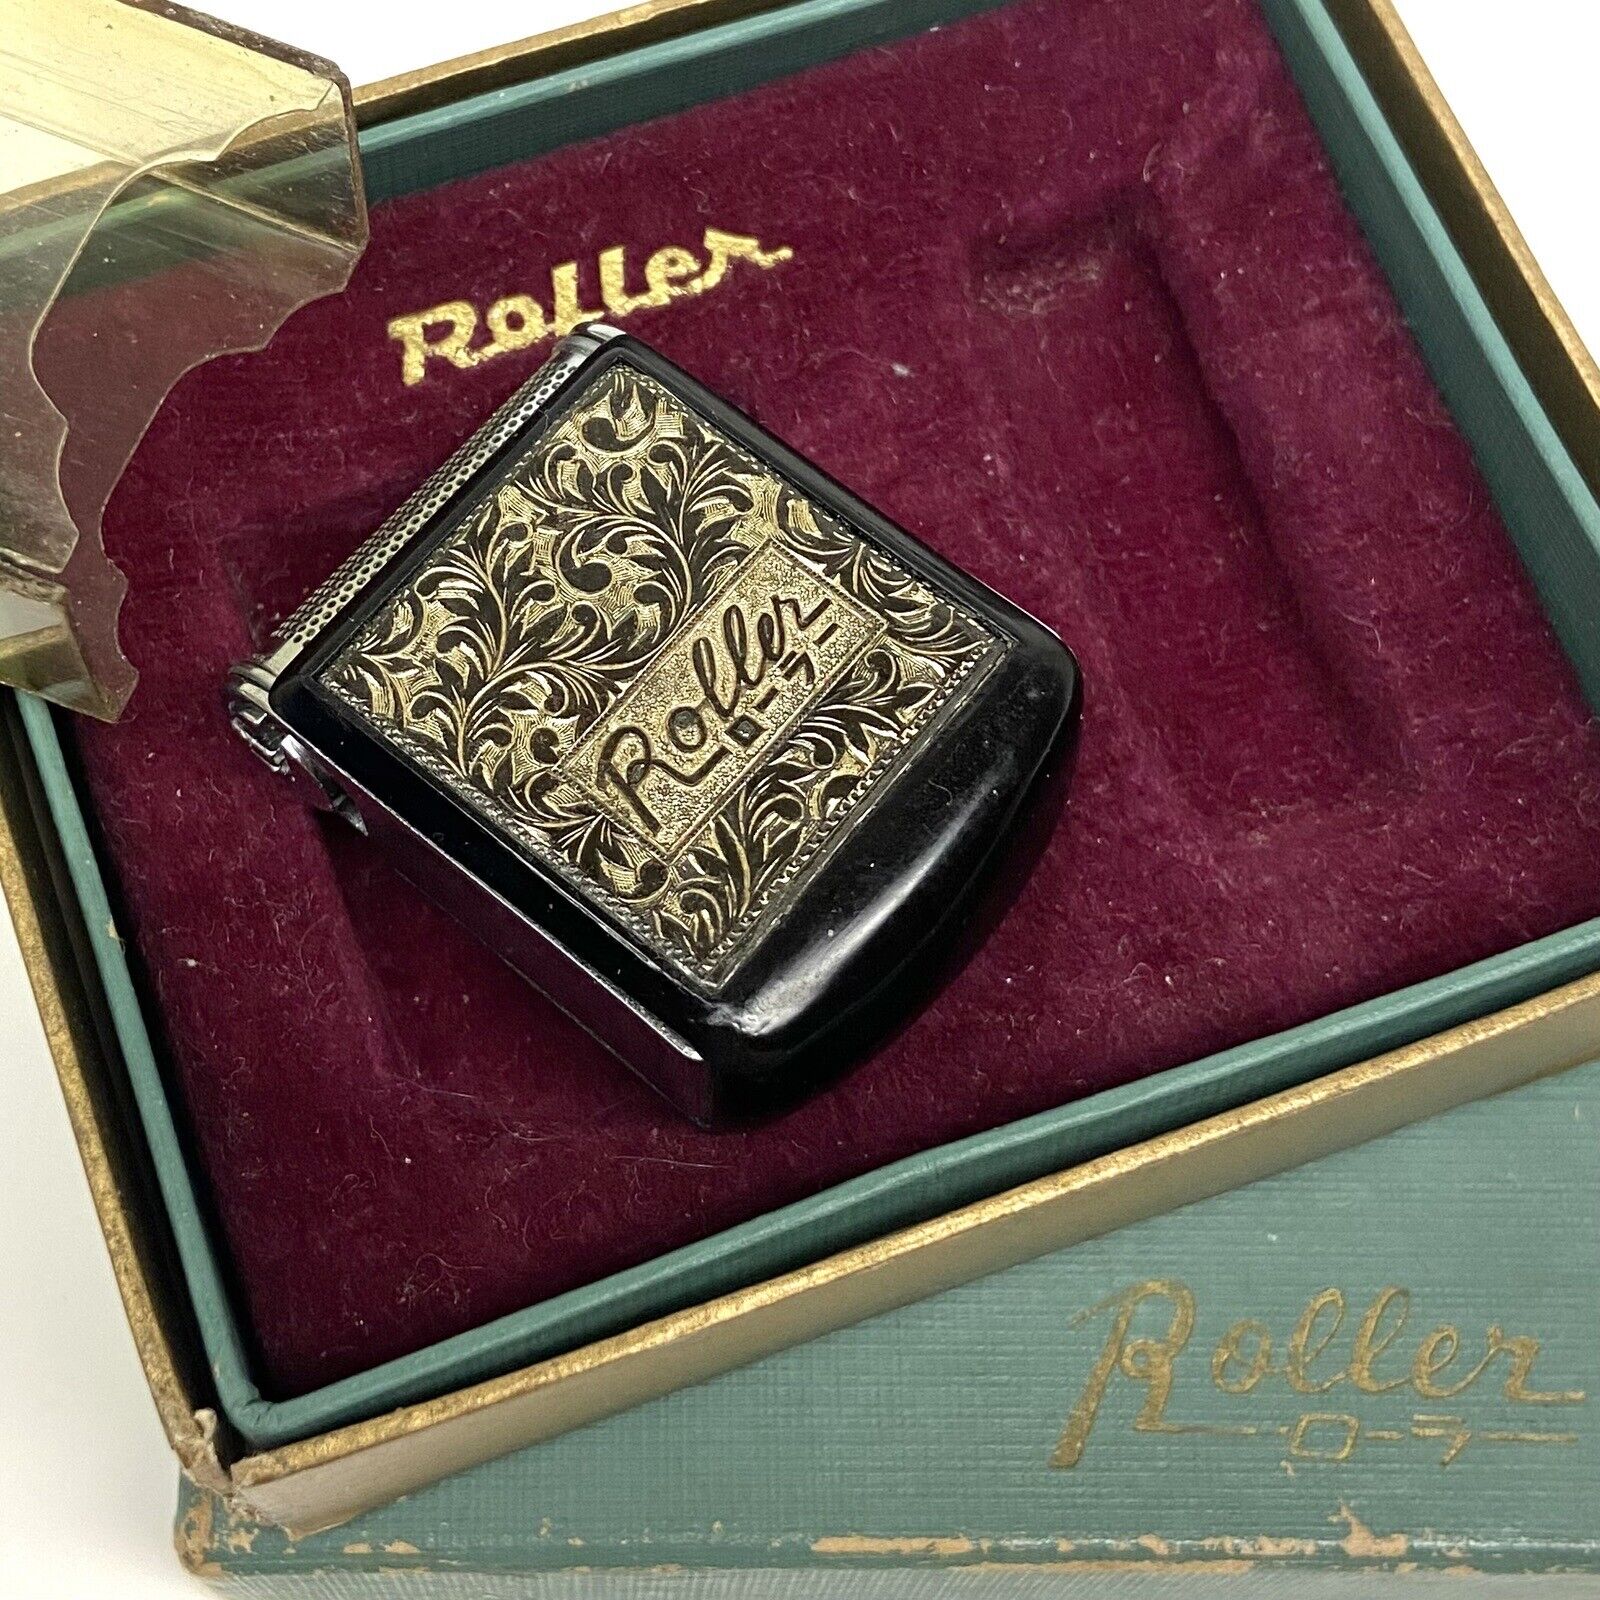 Roller Vintage Dry Shaver World's Smallest Razor with Original Box - Japan